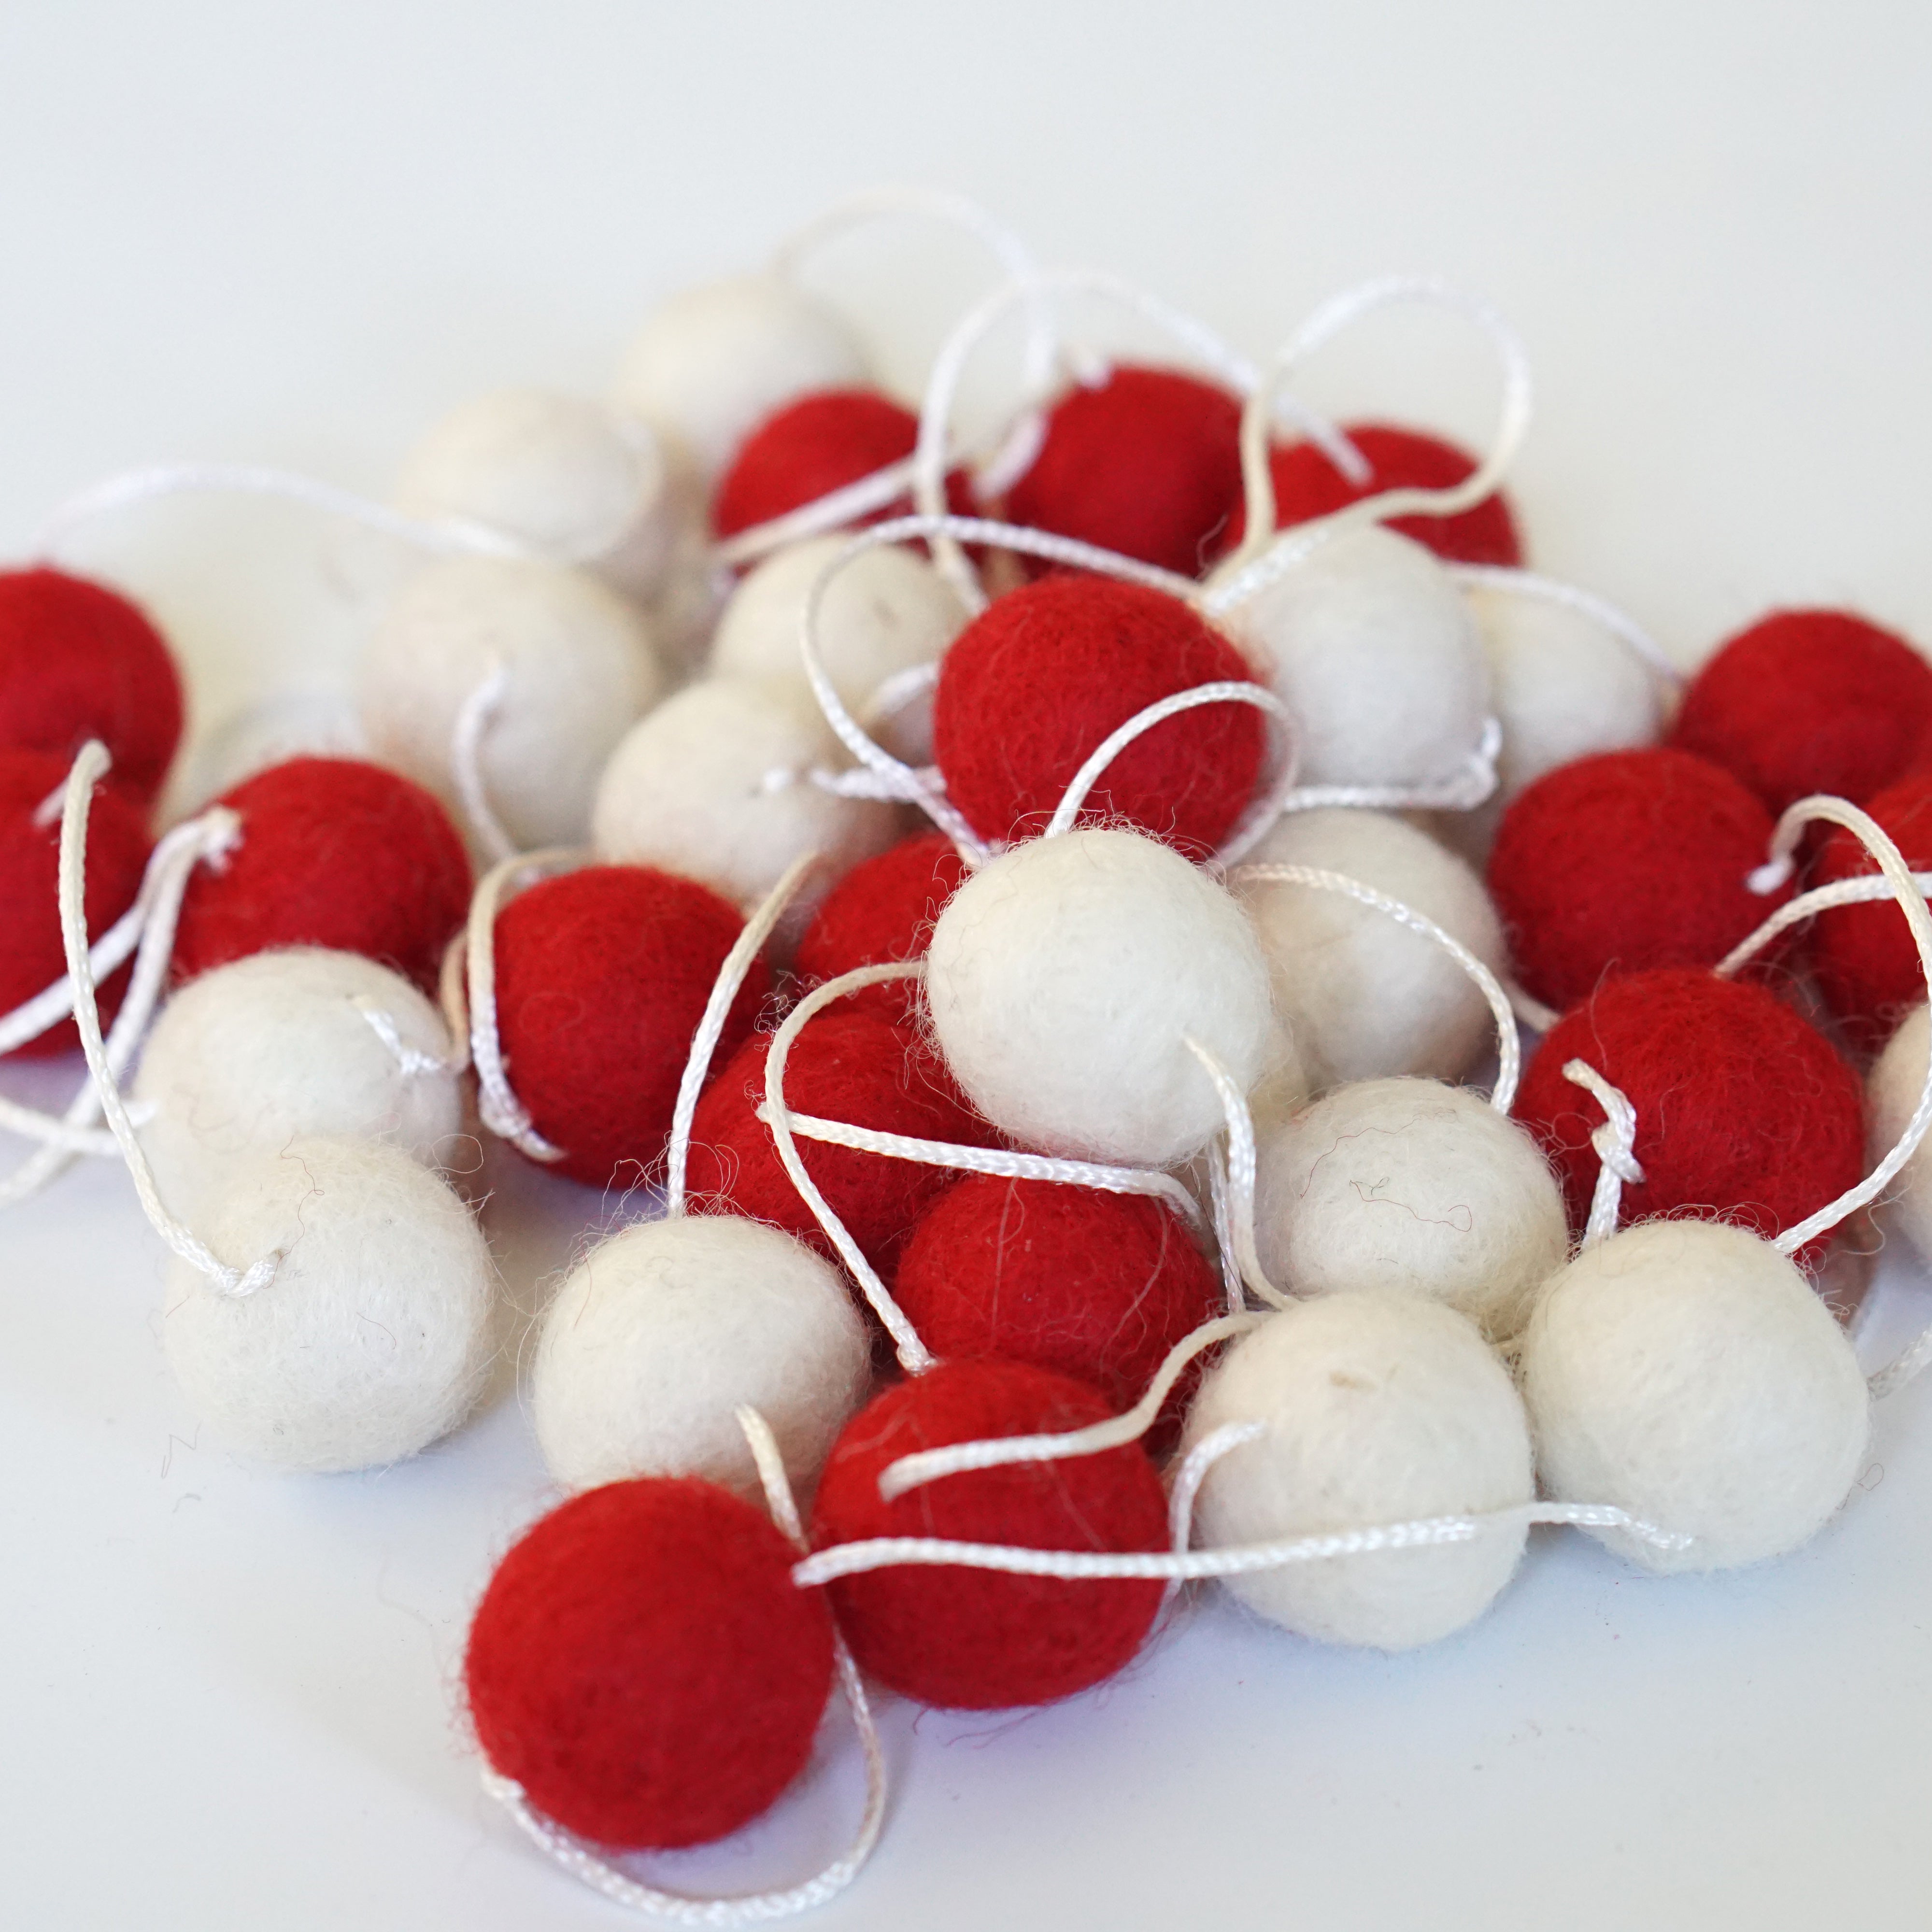 Red Felt Balls 2.5 Cm Felted Wool Balls for Holiday Crafting Wholesale Bulk  Felt Balls DIY Nursery or Holiday Garland Wool Poms Only 